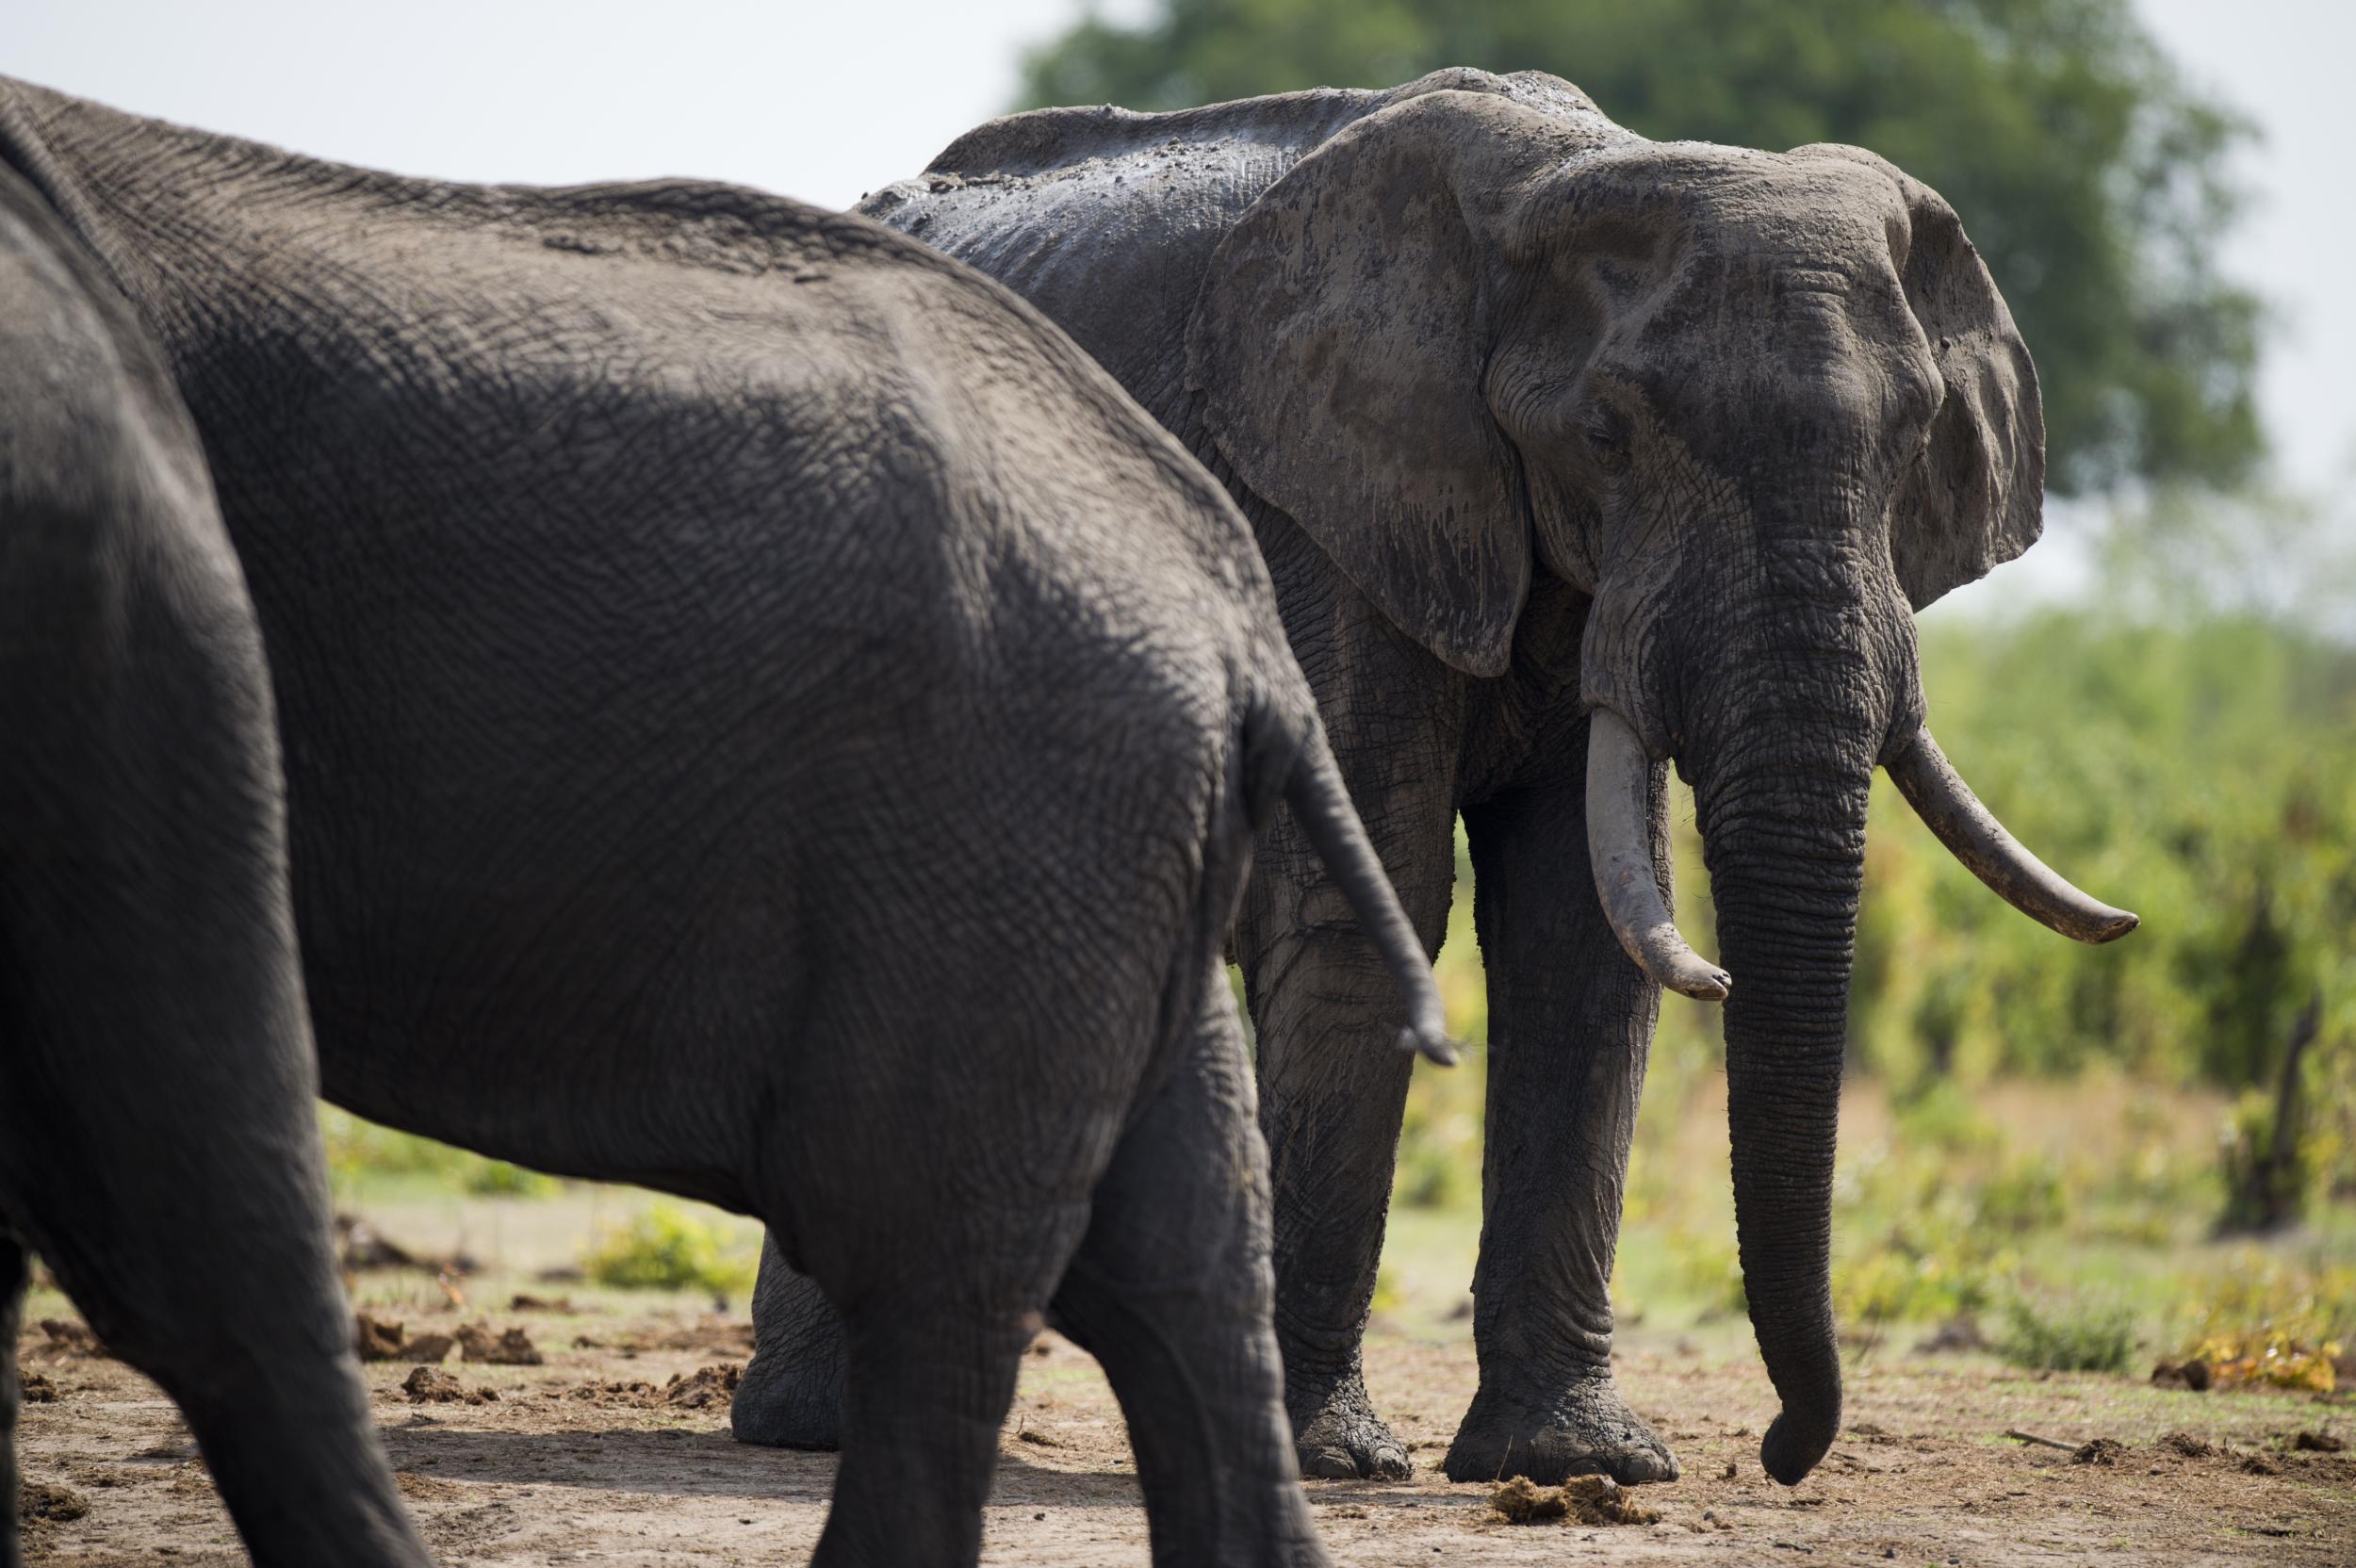 African elephants in Zimbabwe's Hwange National Park